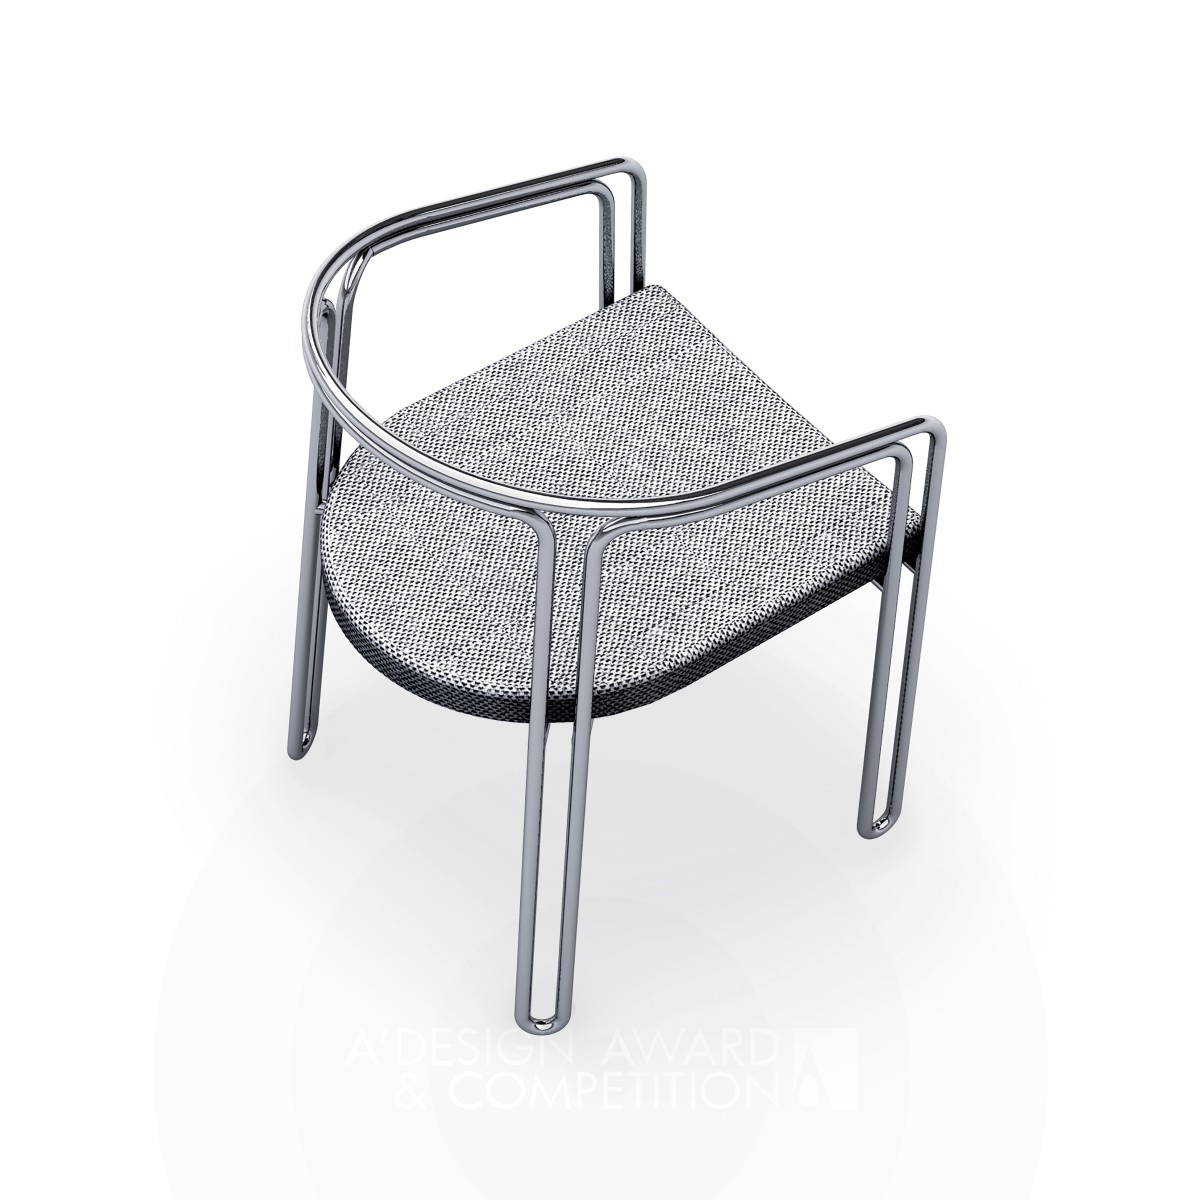 One Stroke Chair: Redefining Furniture Design